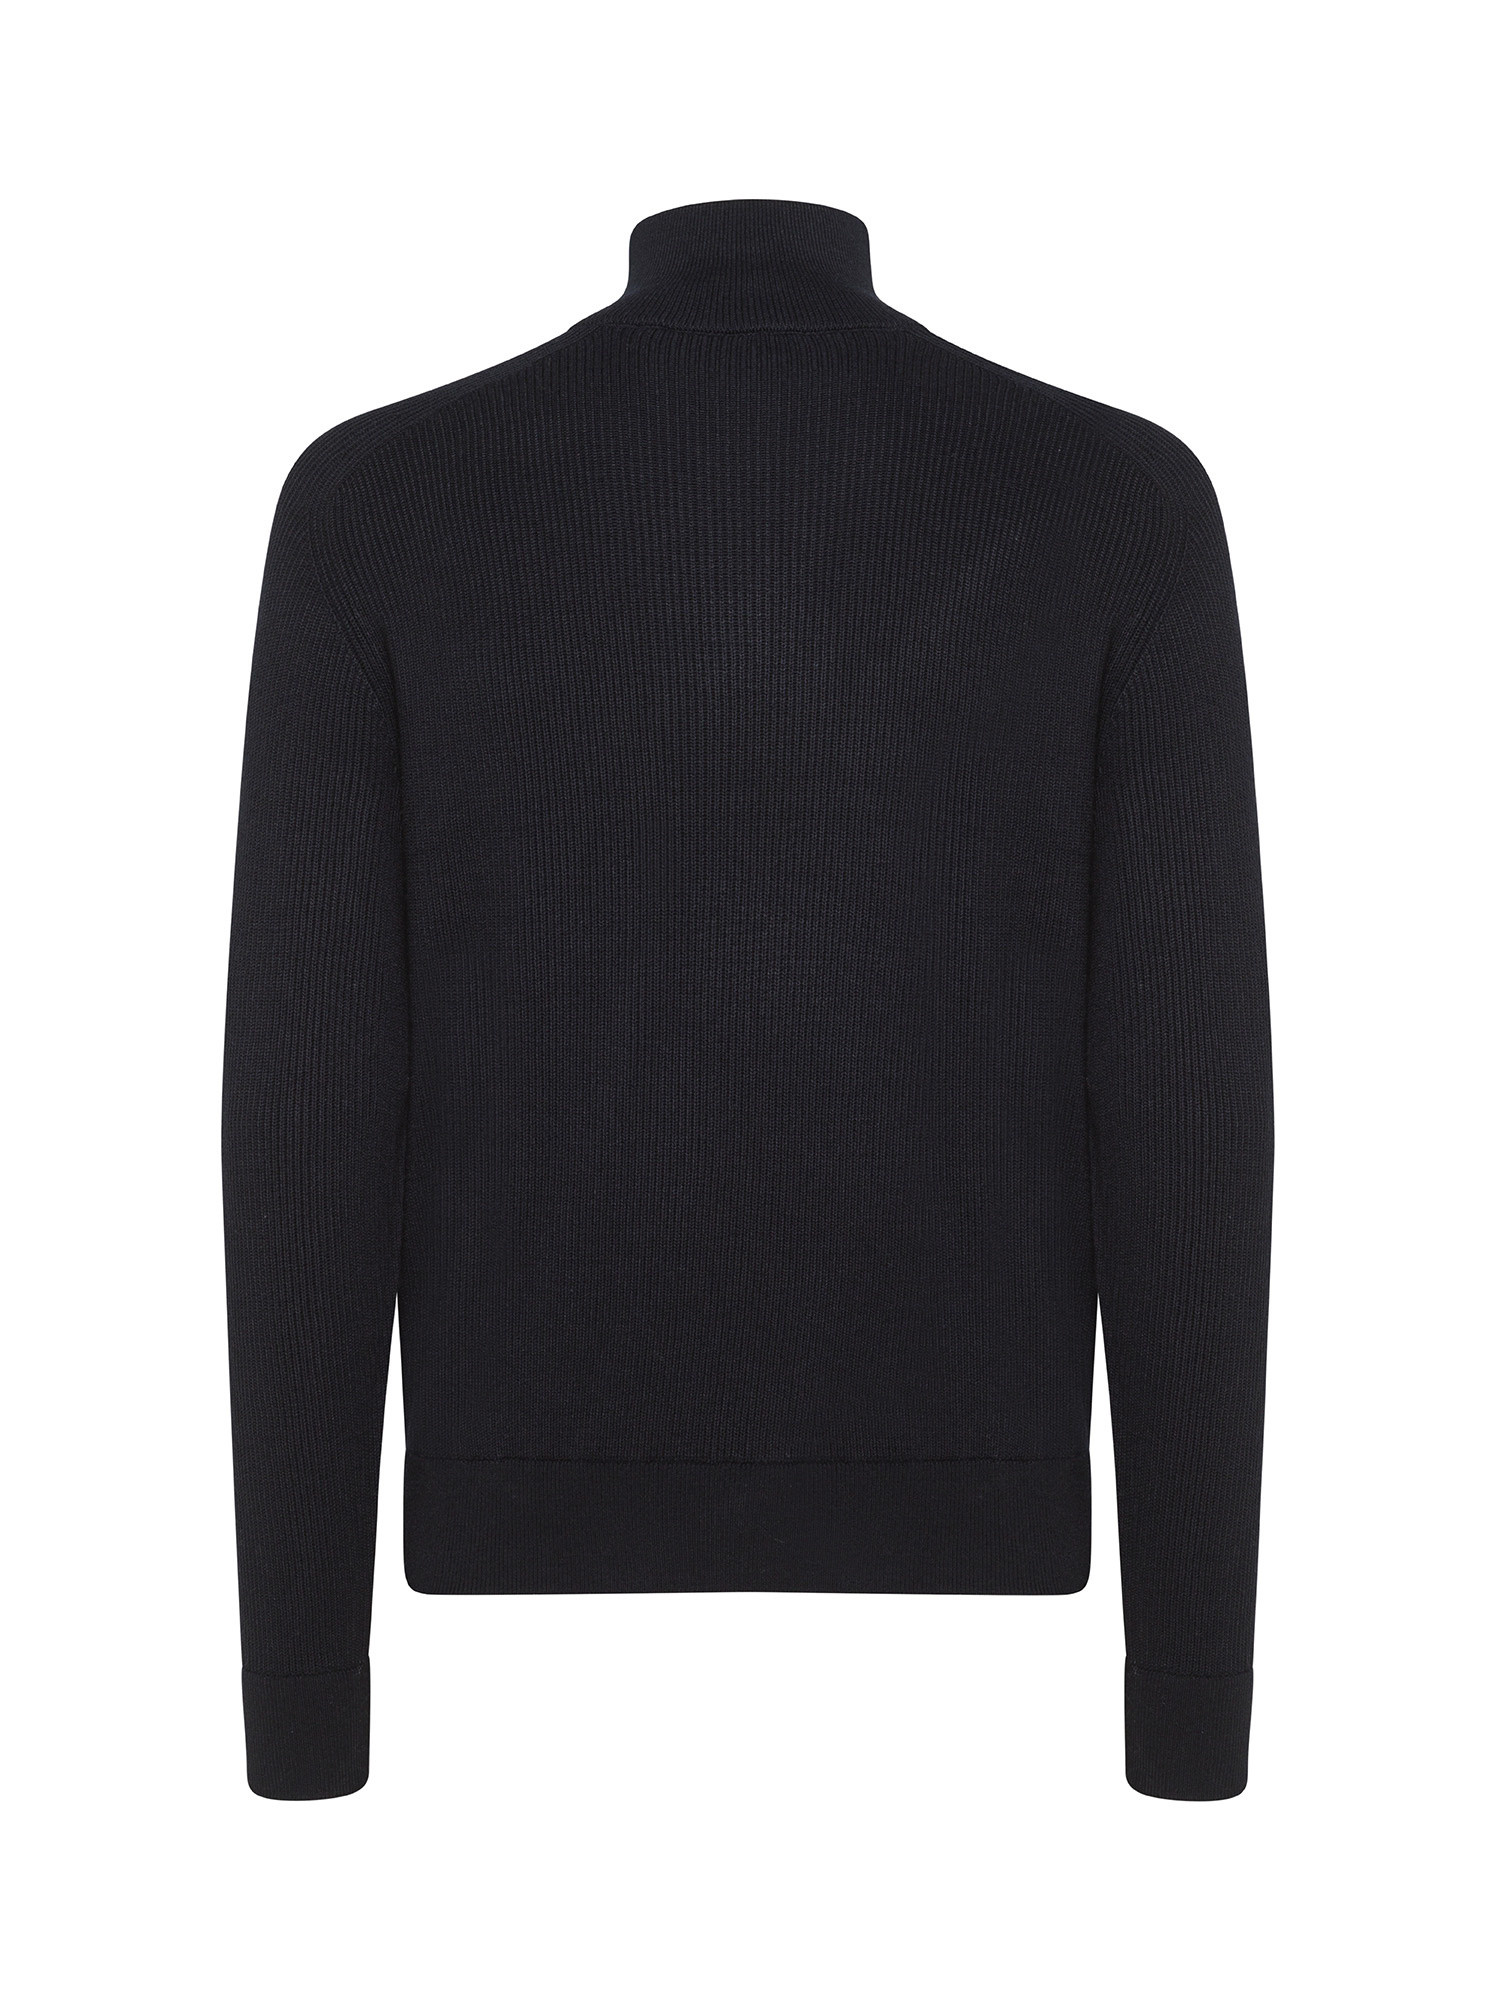 Armani Exchange - Turtleneck sweater in merino wool blend, Dark Blue, large image number 1